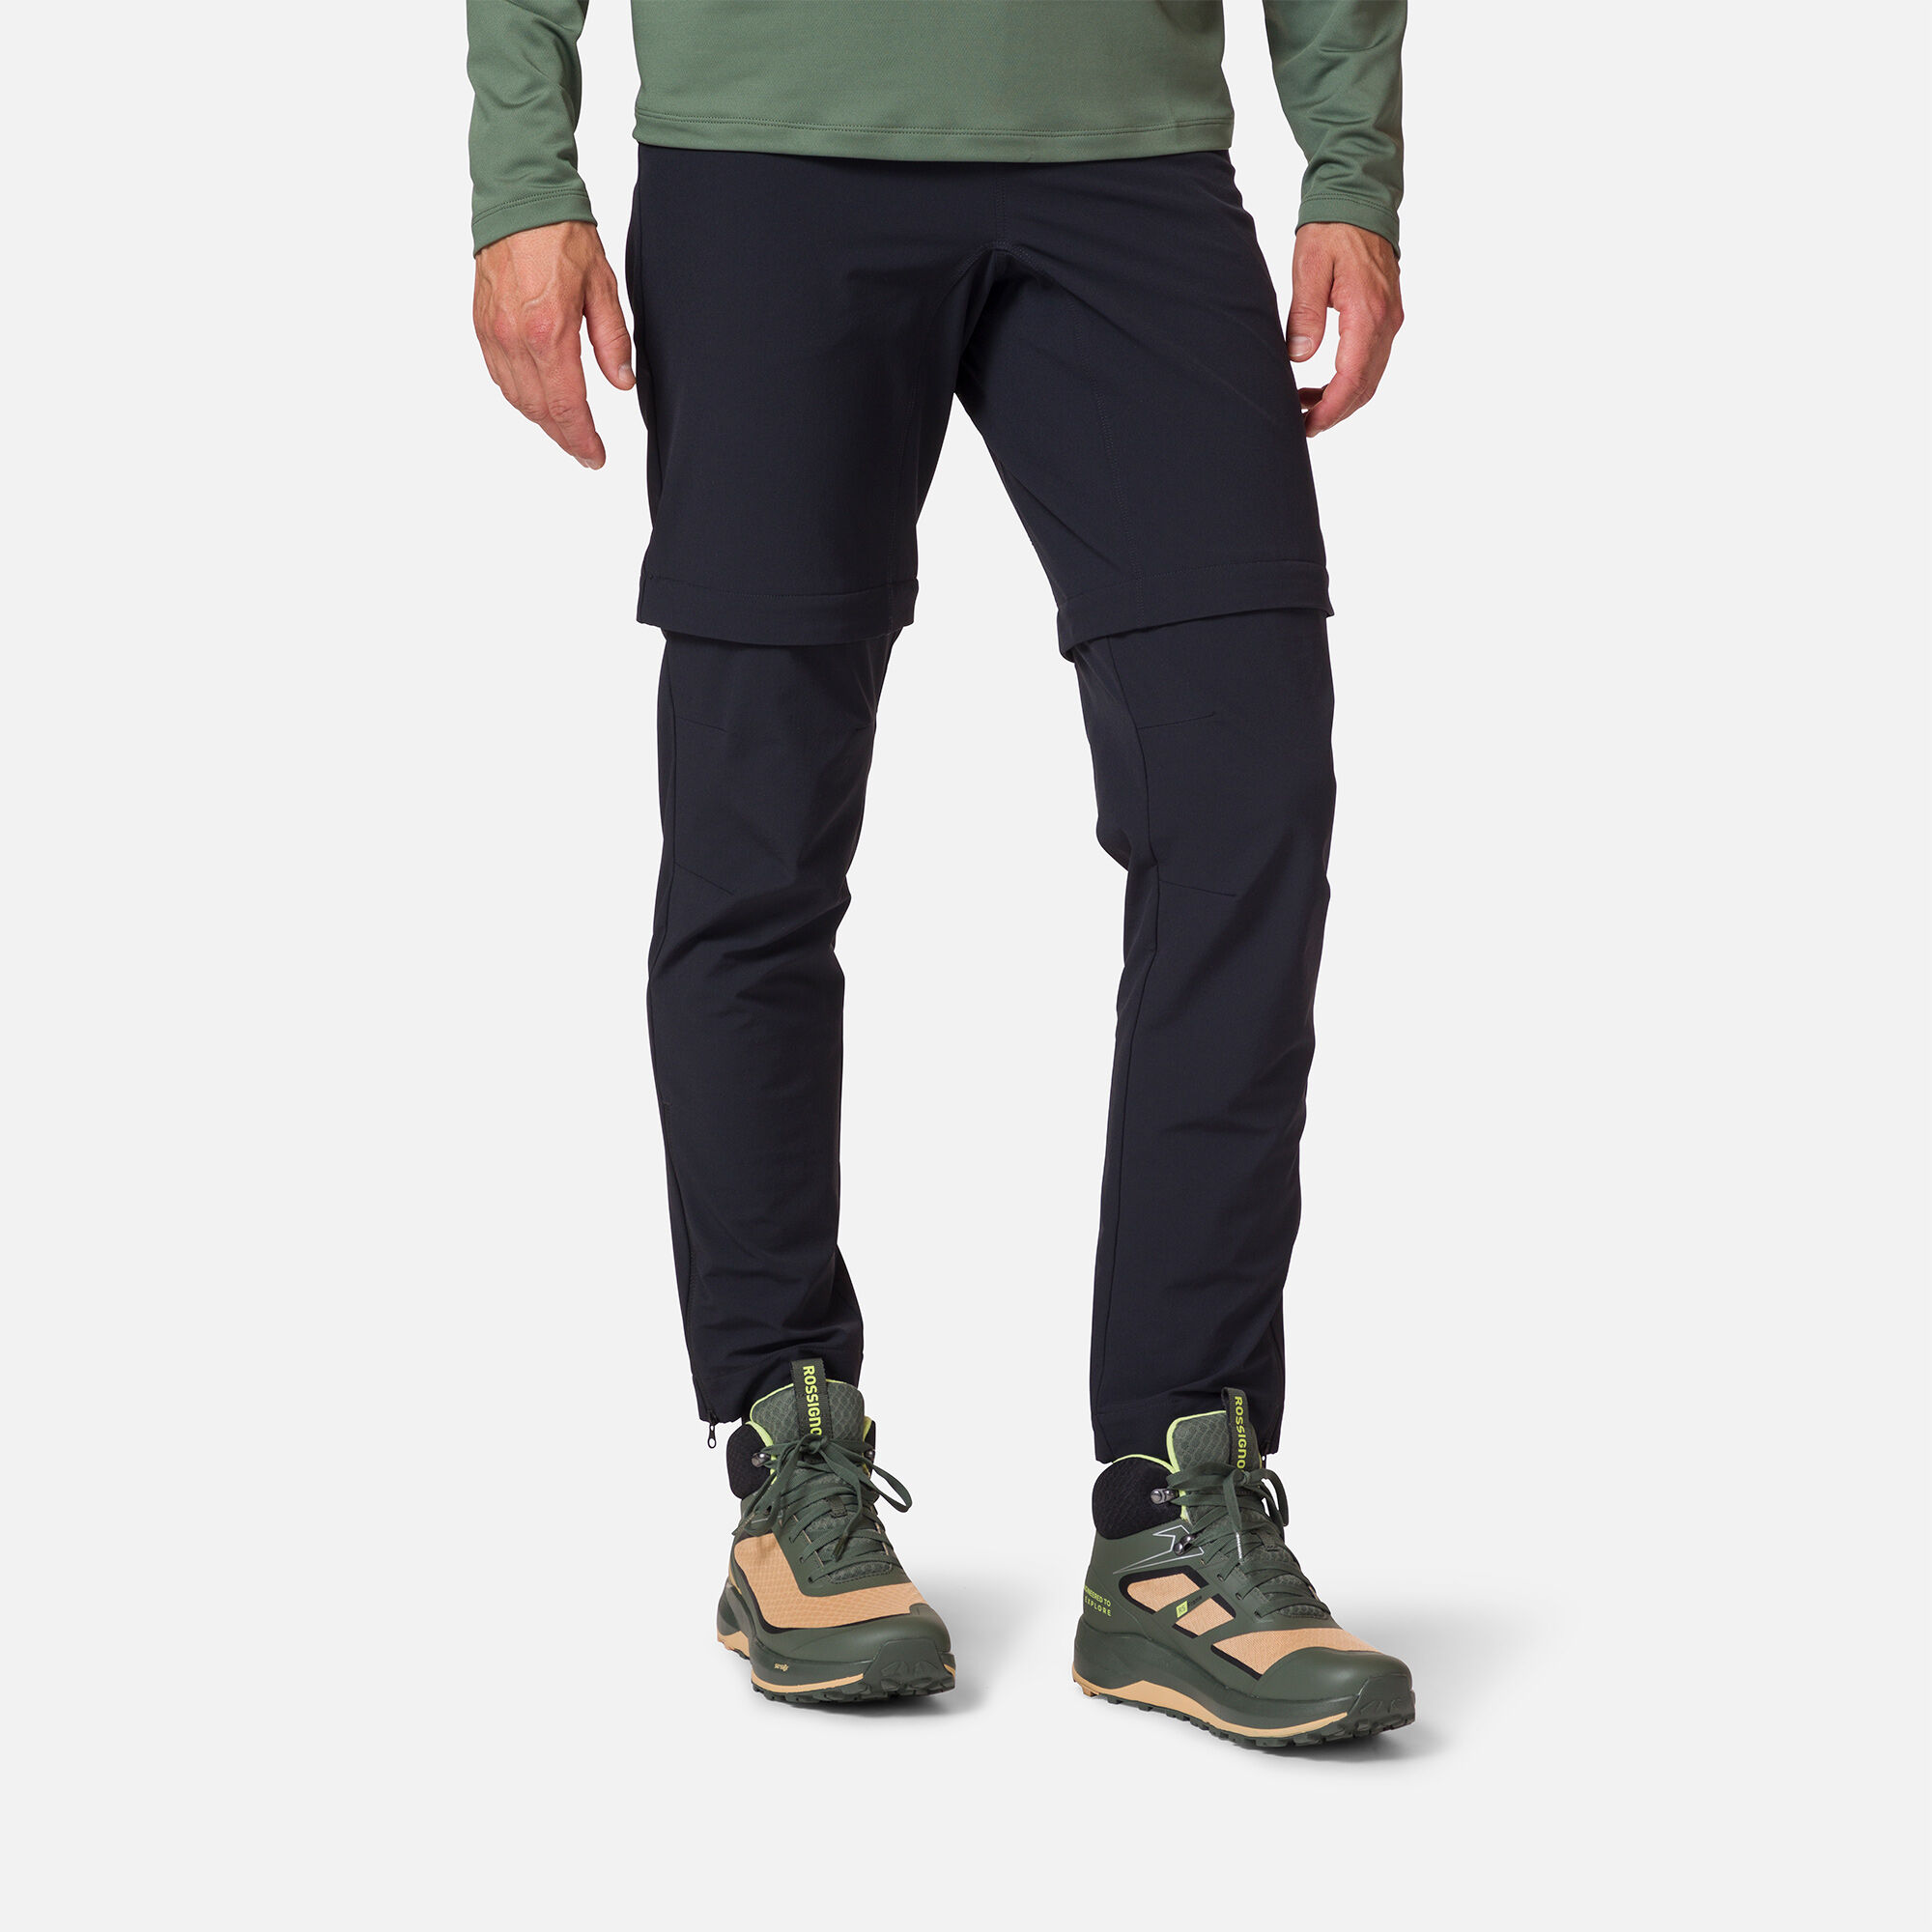 The North Face - Men's Convertible Trousers - Men's Convertible Trousers to  Shorts - Waterproof Work or Hiking Trousers - ASPHALT GREY, UK 38 :  Amazon.co.uk: Fashion